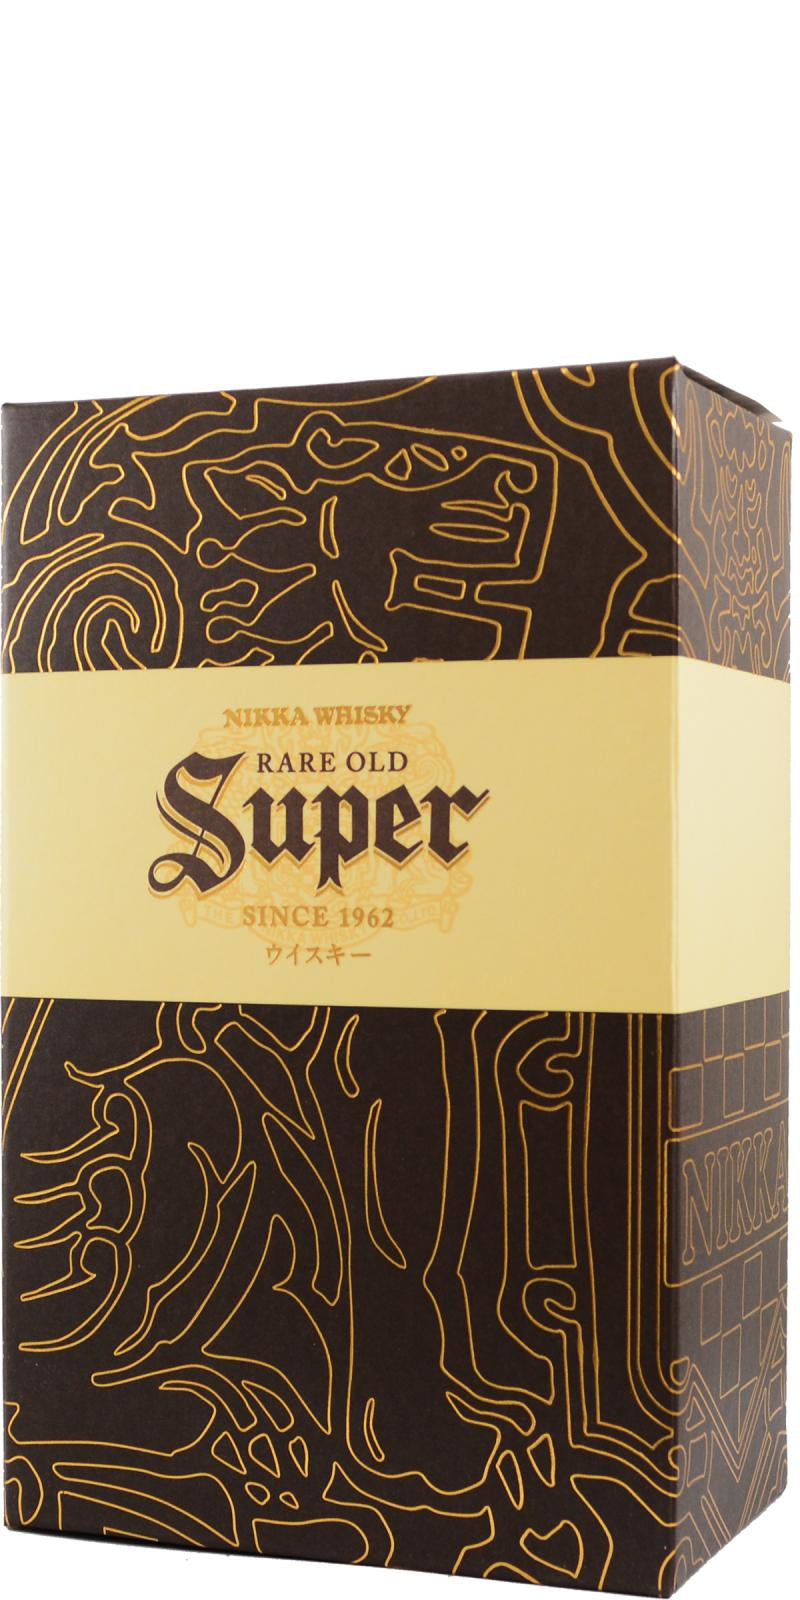 Nikka Whisky Rare Old Super since 1962 700ml 43%